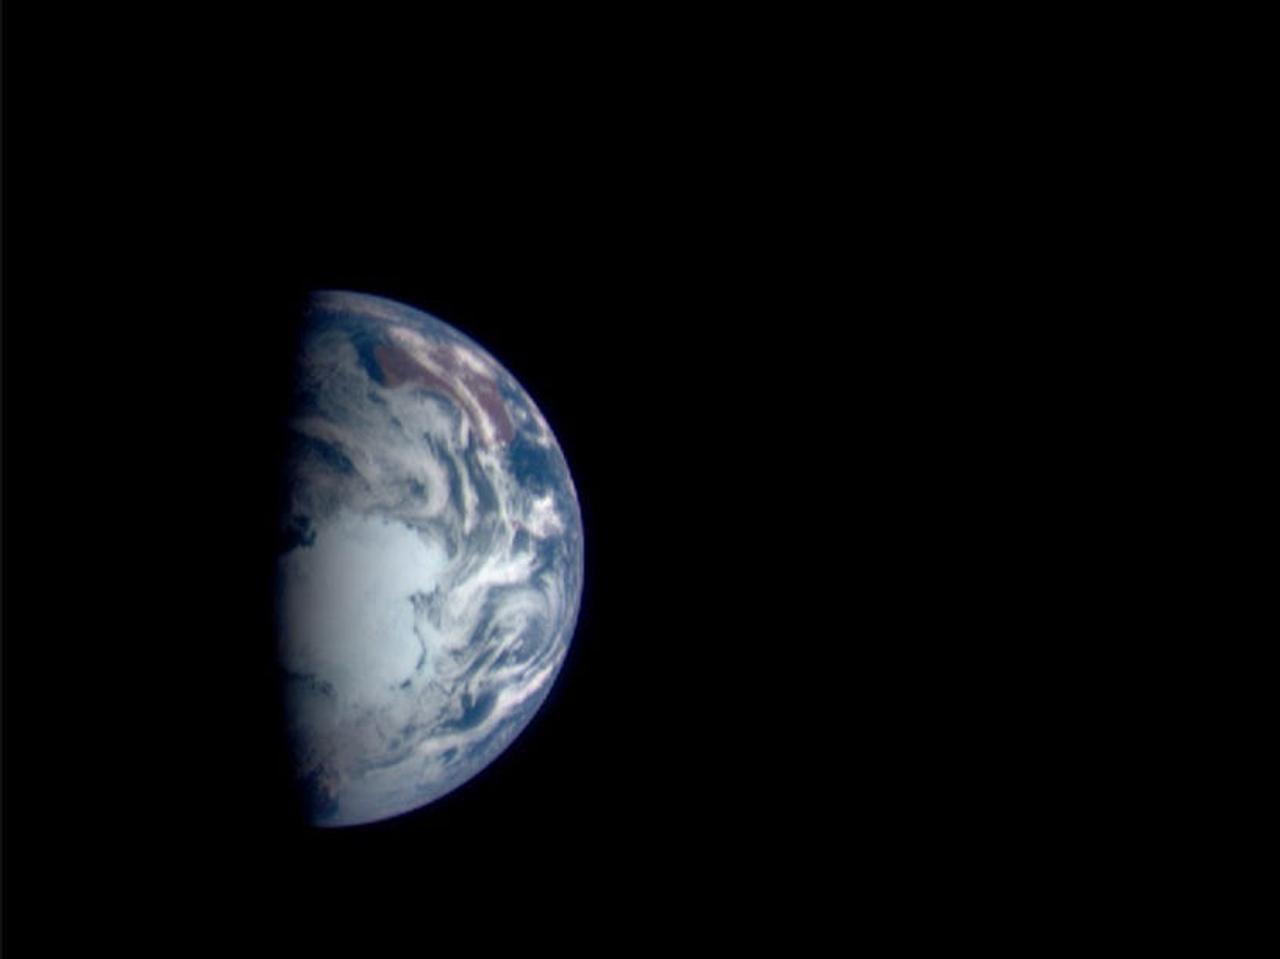 NASAの小惑星探査機｢NEAR｣が1998年1月にとらえた地球の姿。モザイク合成画像。